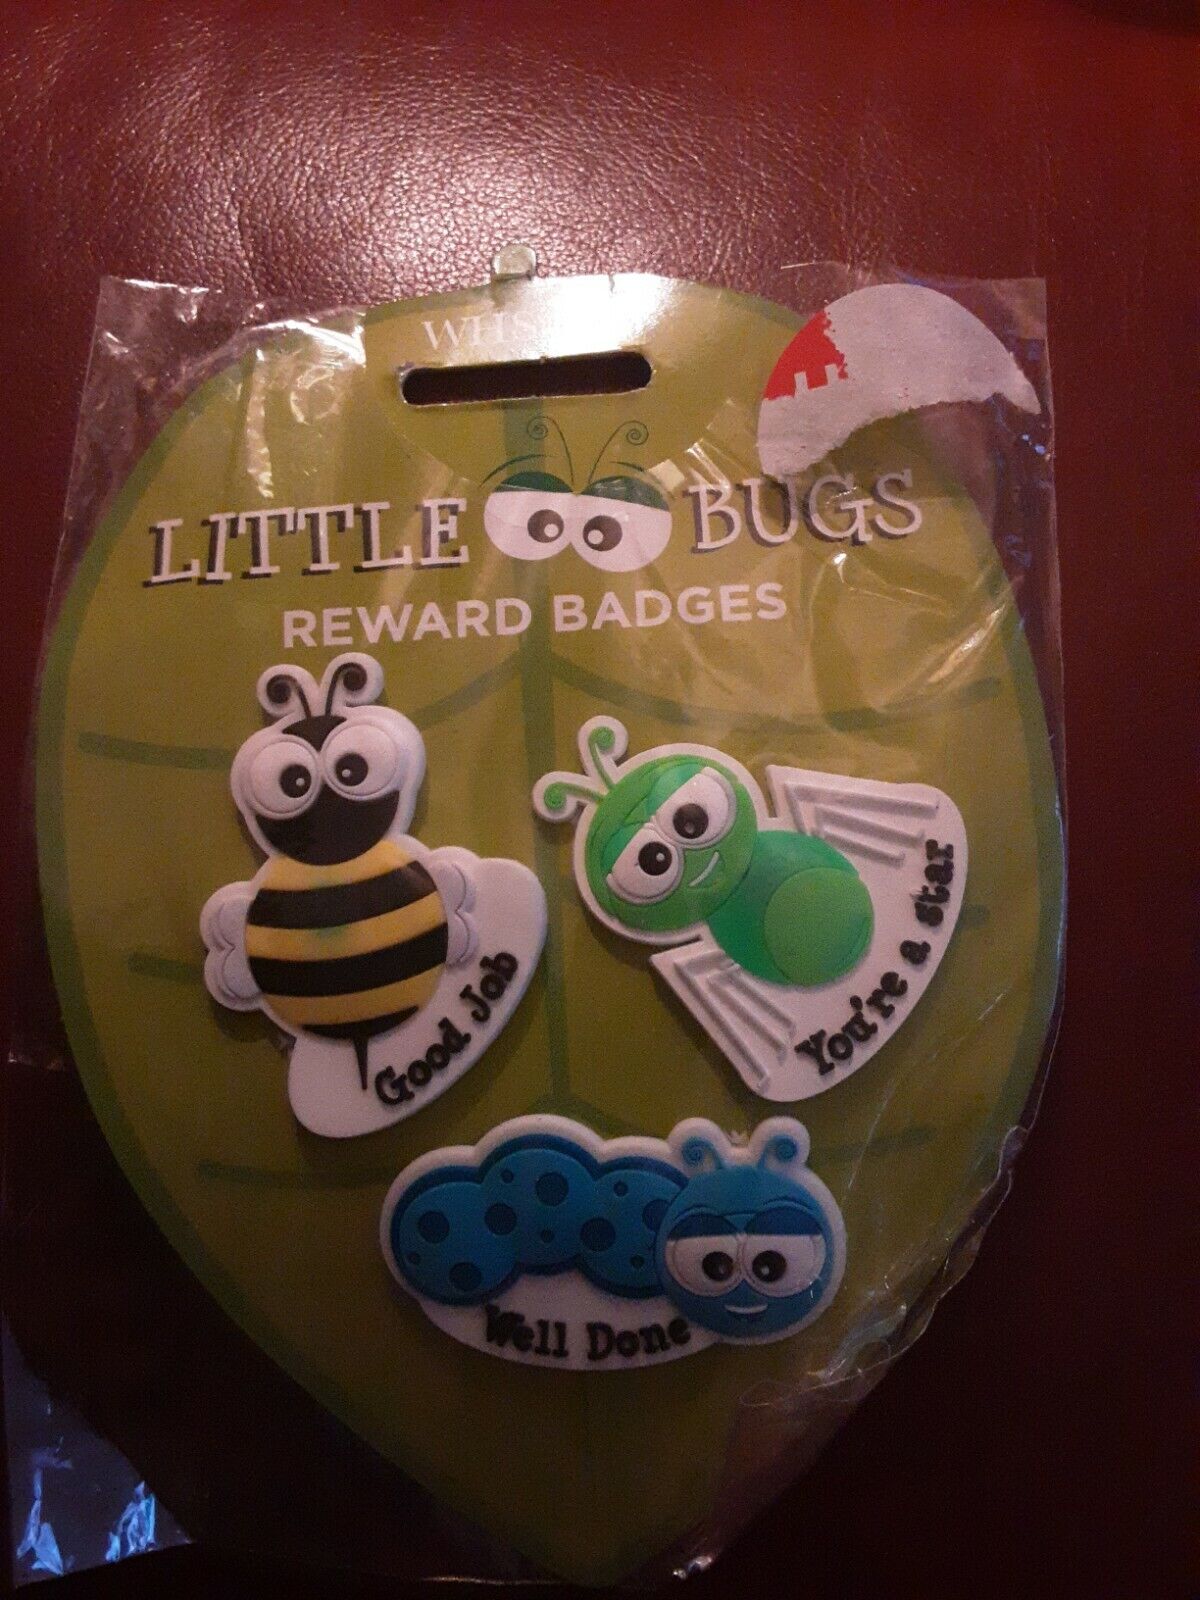 Wh Smith Popular popular Little Bugs pins Reward Badges 5 ☆ popular 3x